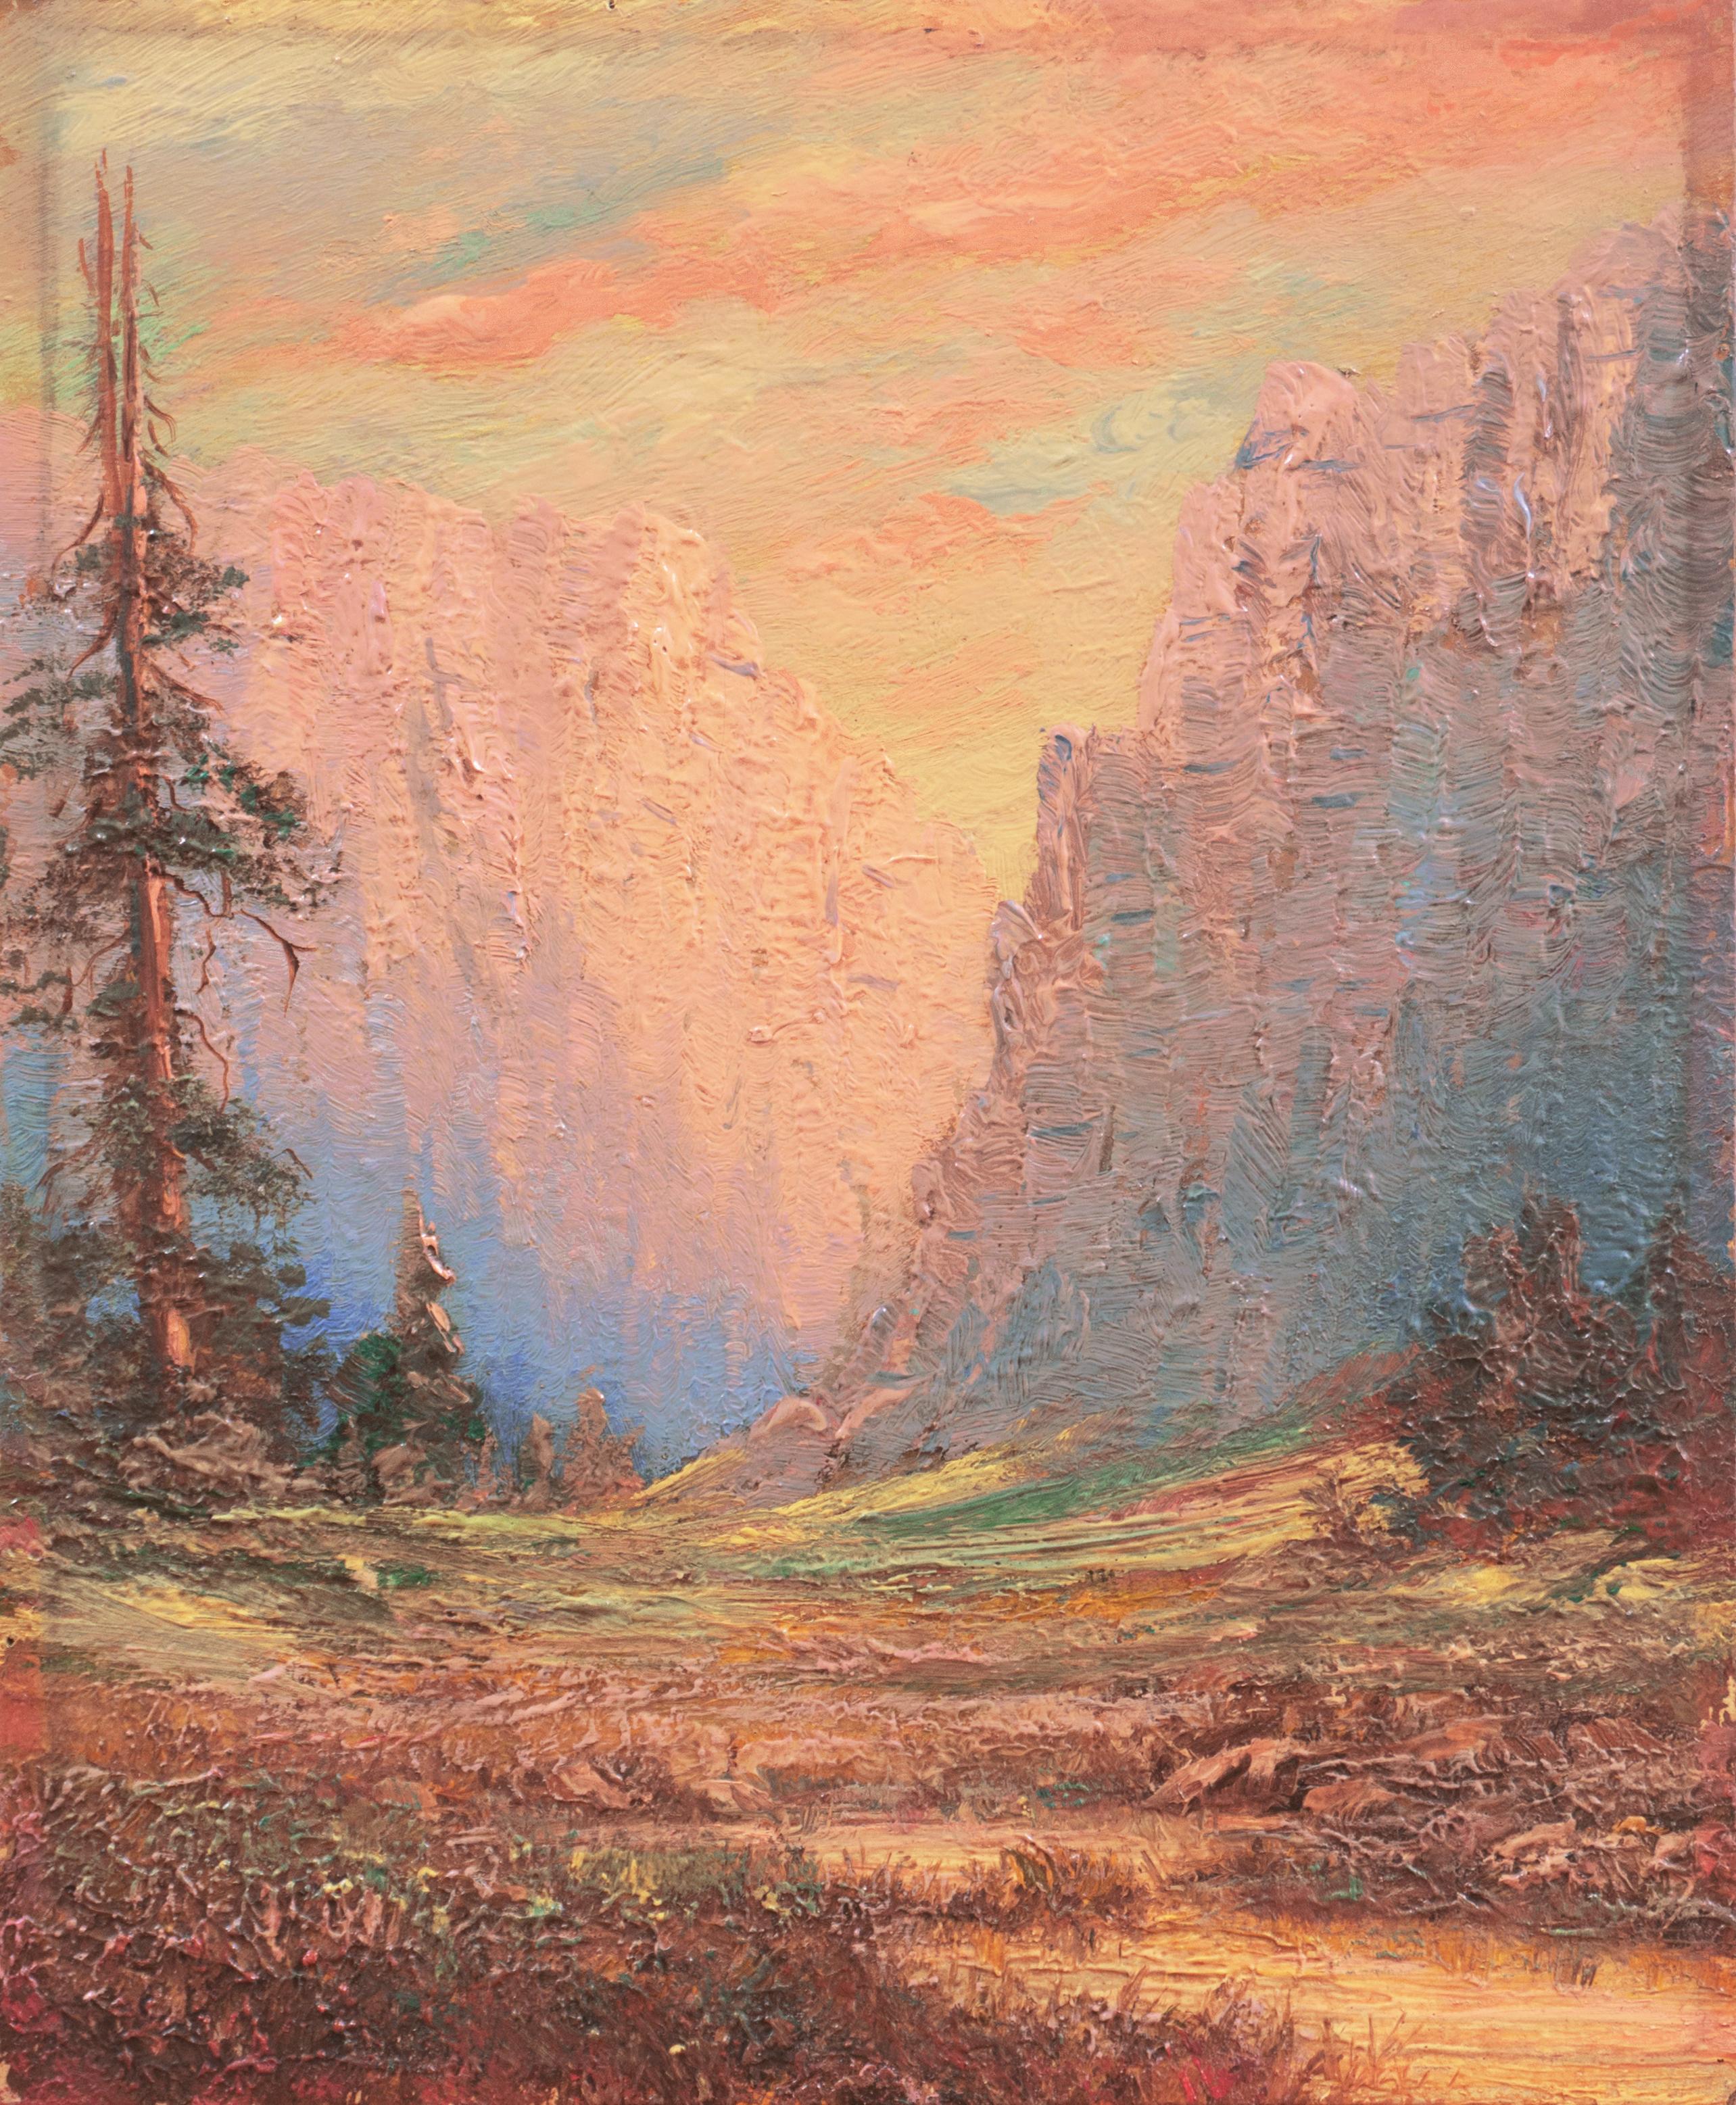 'Sunset Over El Capitan', American Impressionism, Yosemite, California Landscape - Painting by C.B.